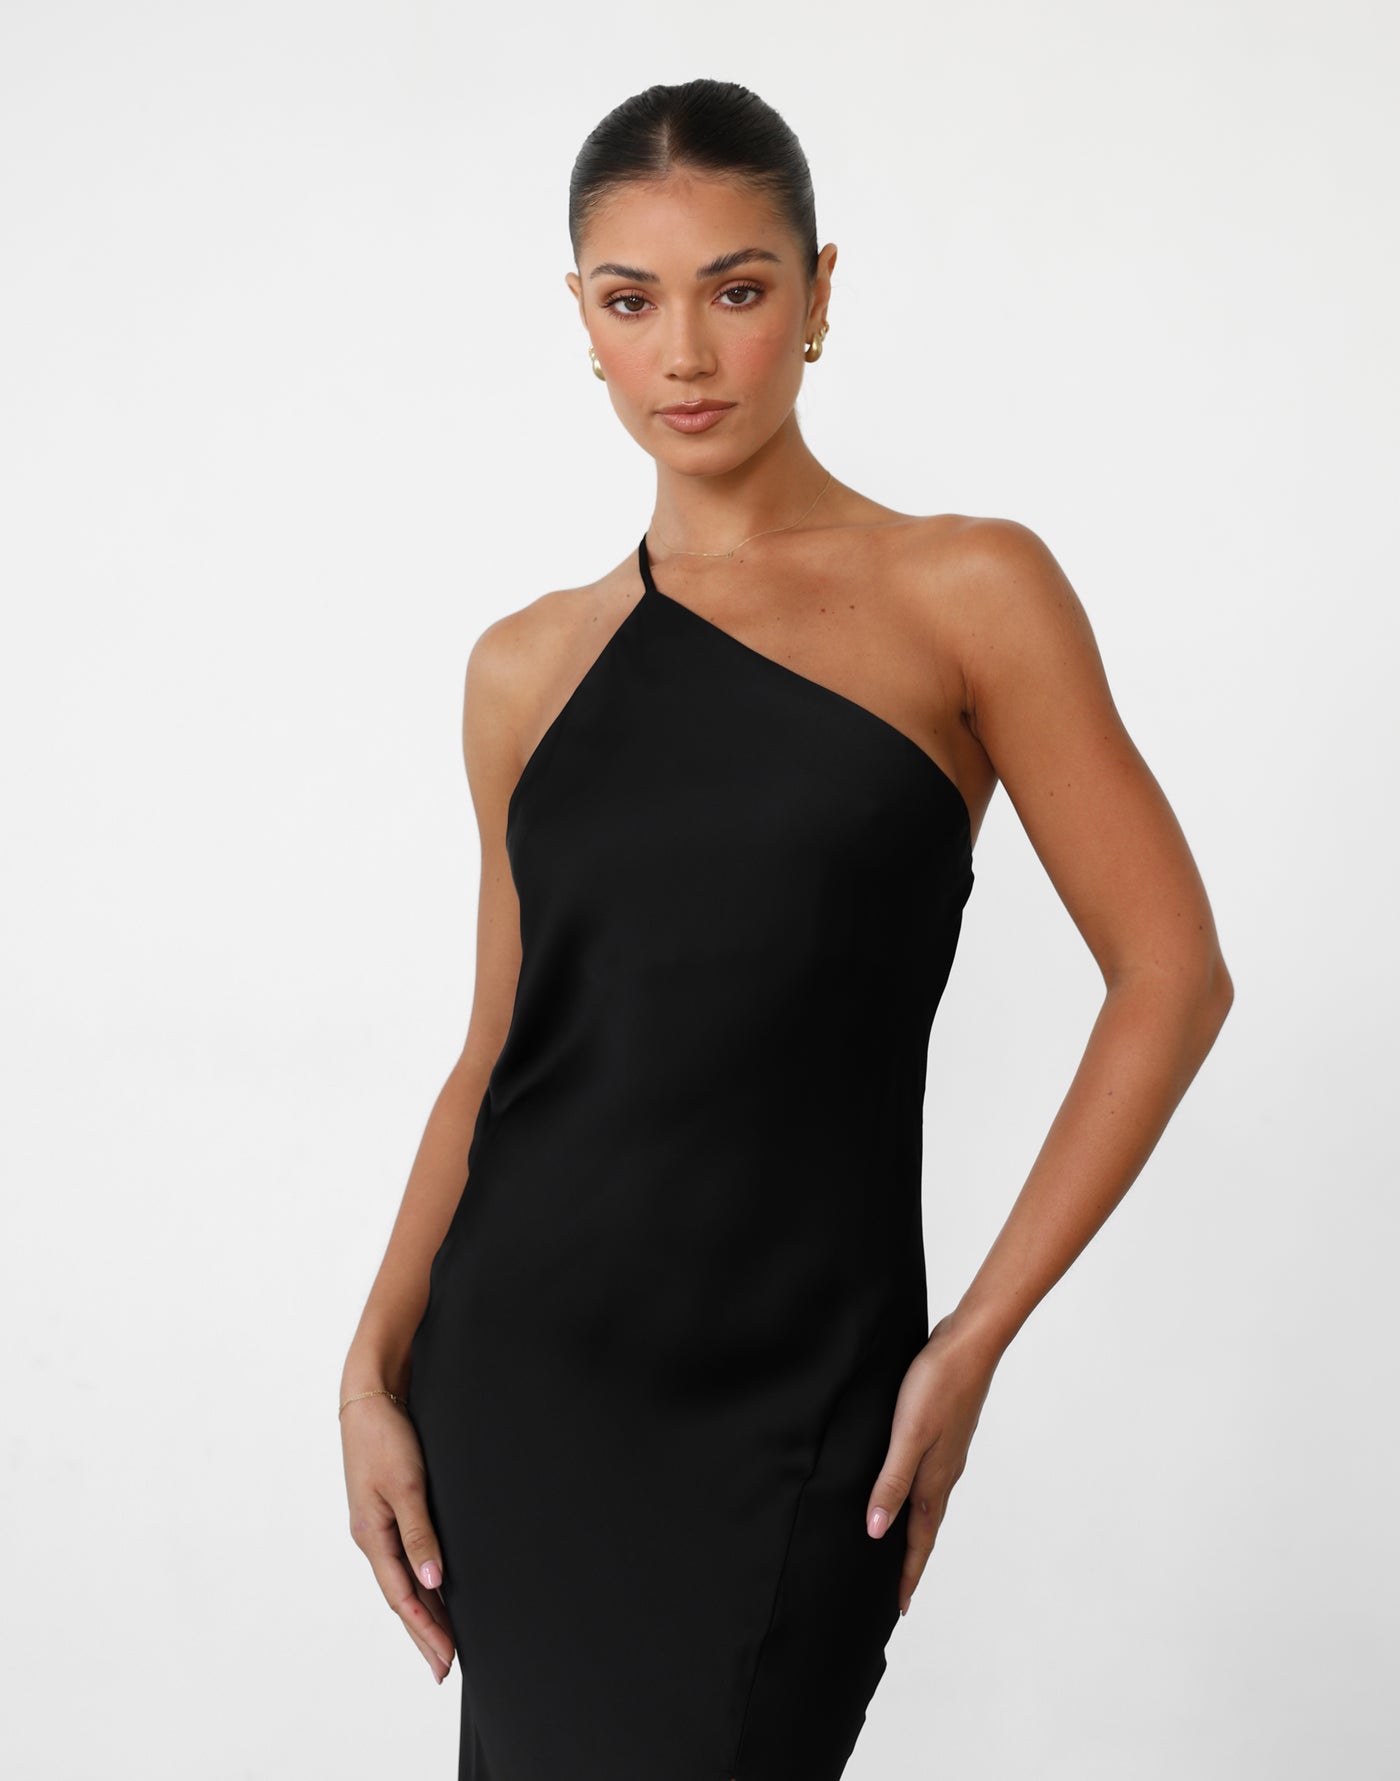 Alexandra Maxi Dress (Black) - Black One Shoulder Maxi Dress - Women's Dress - Charcoal Clothing